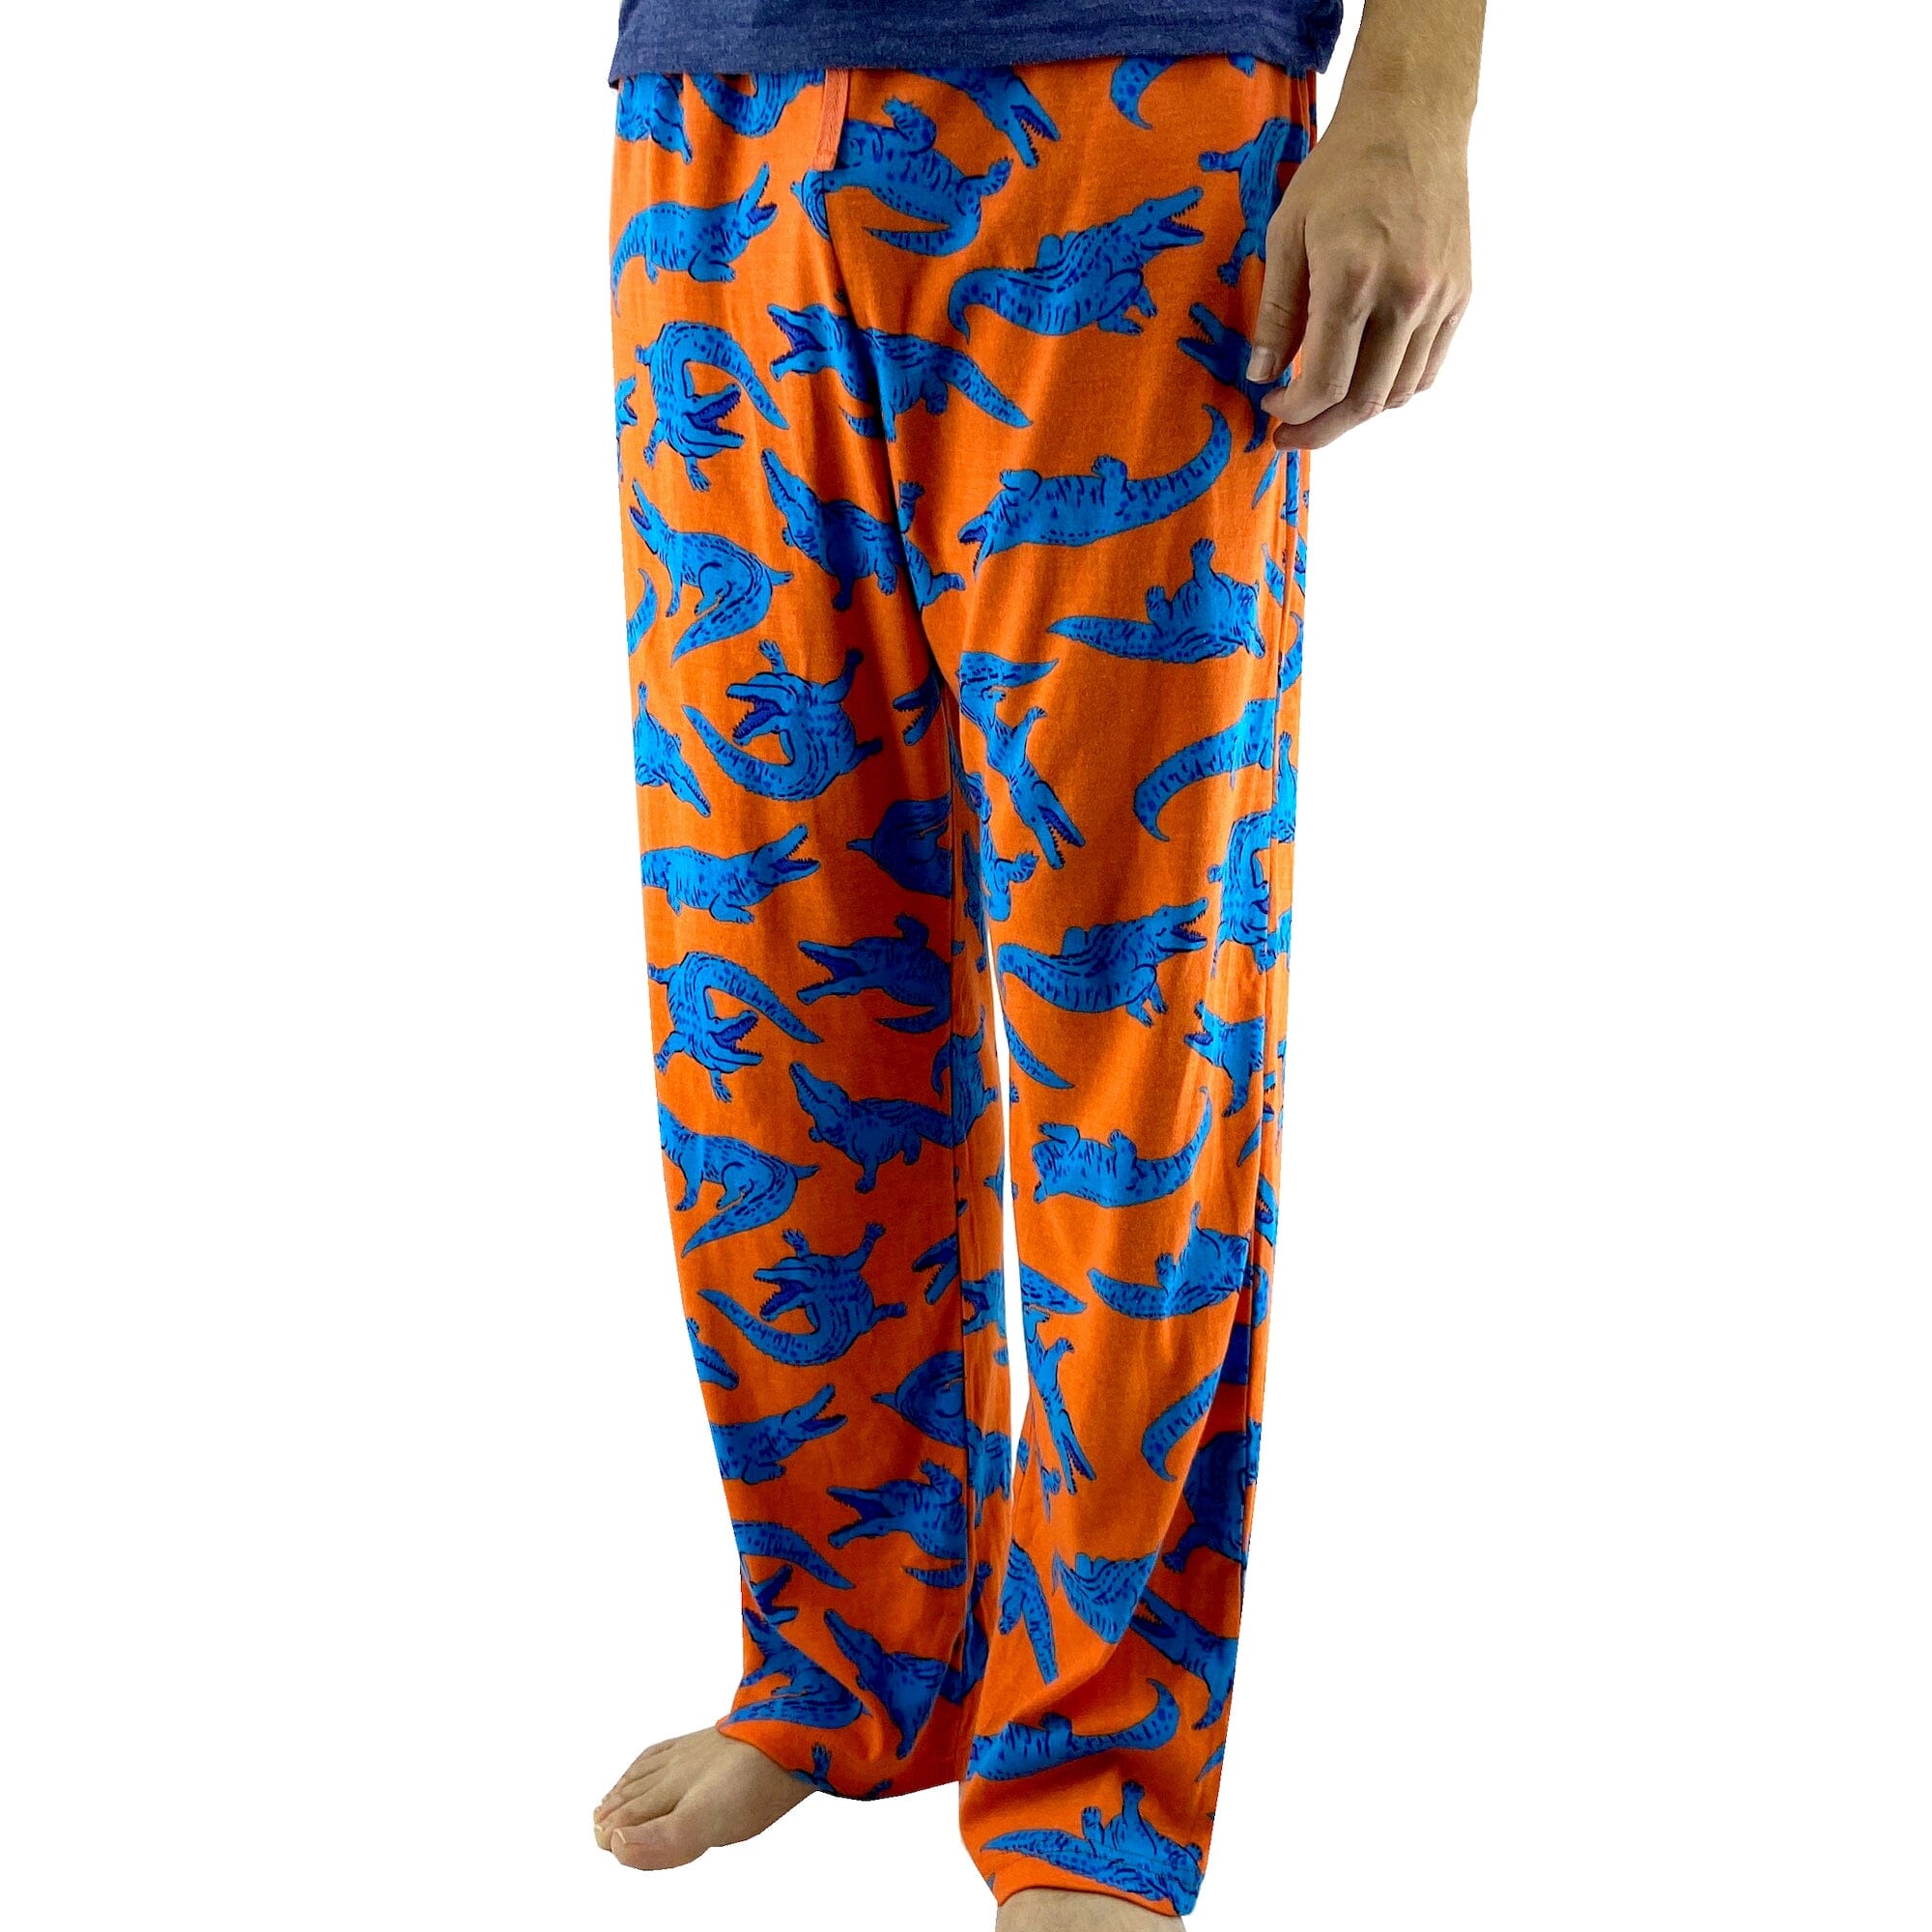 Men's Alligator All Over Print Soft Jersey Knit Long Pajama Bottoms